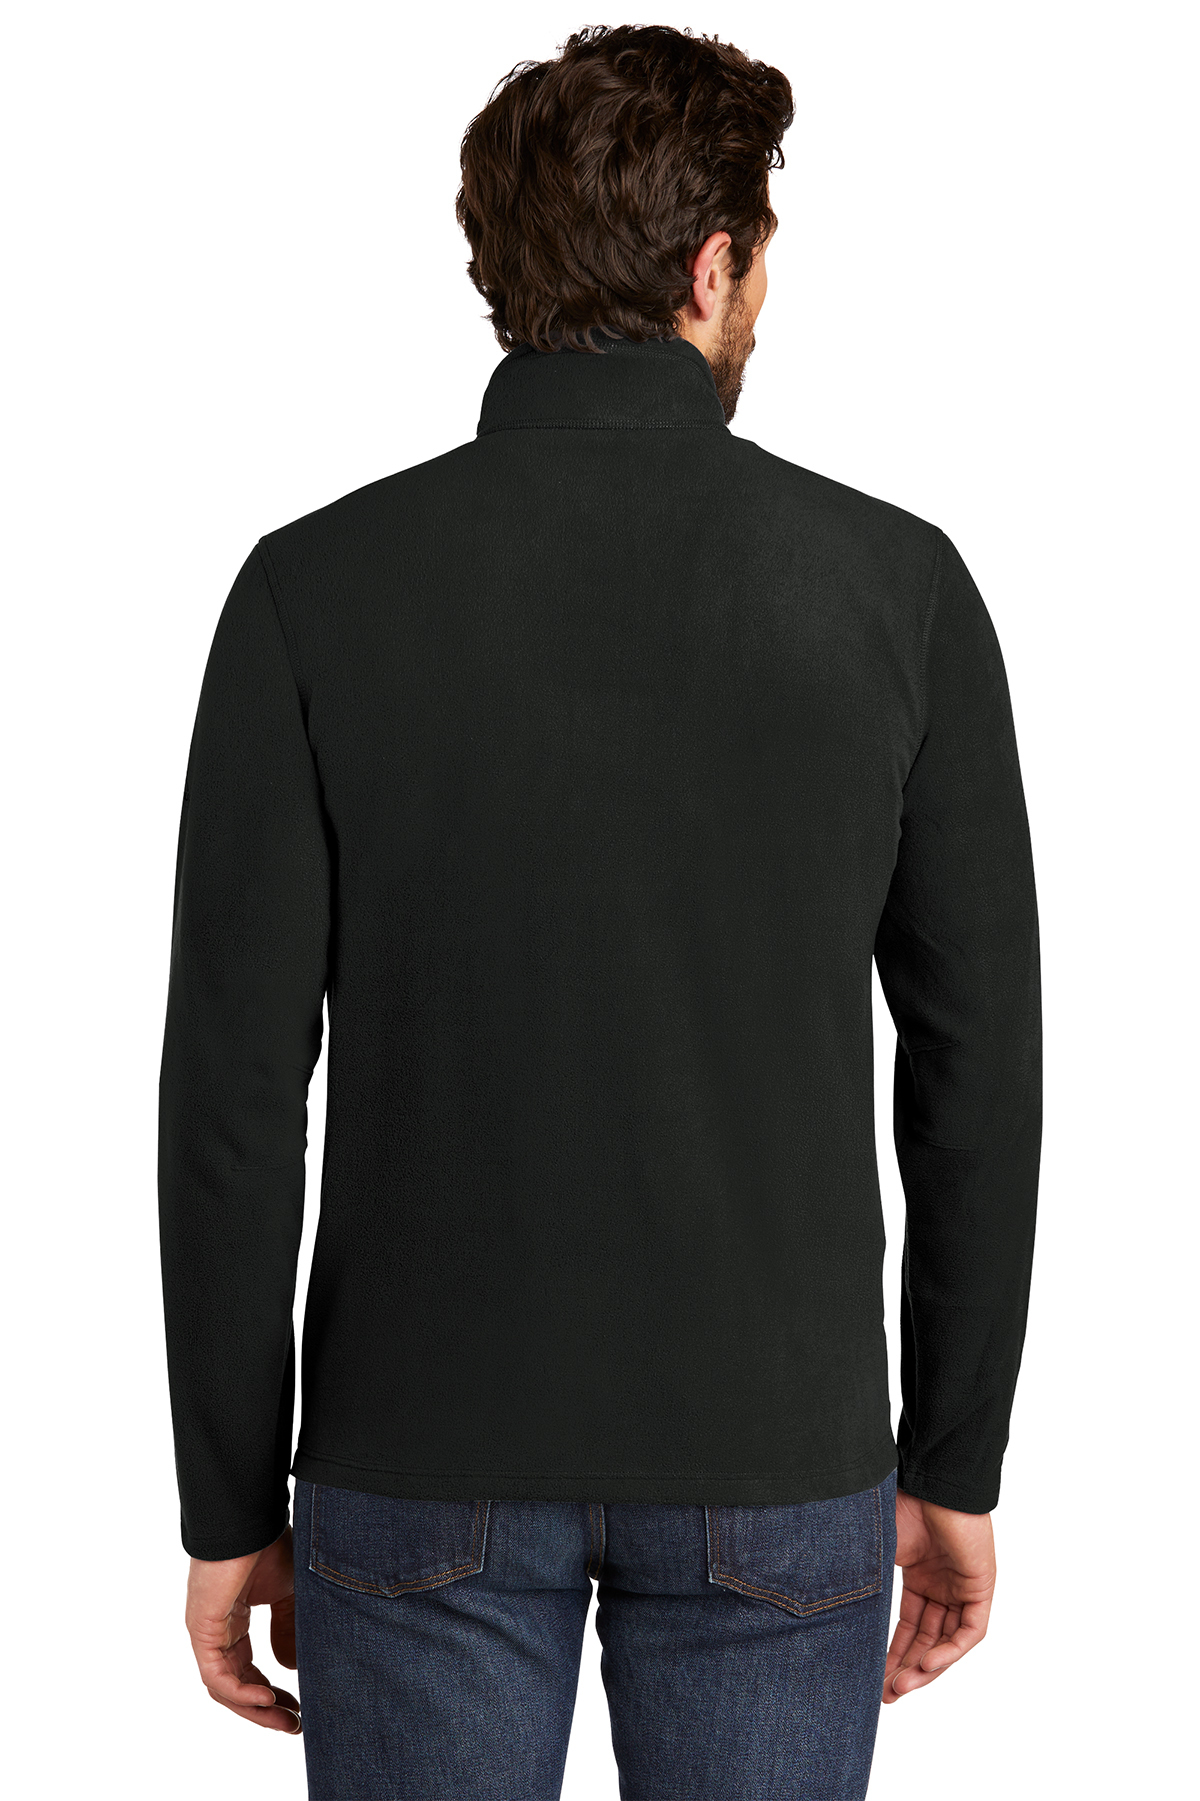 Bright Ideas: Eddie Bauer® Men's Full-Zip Microfleece Jacket